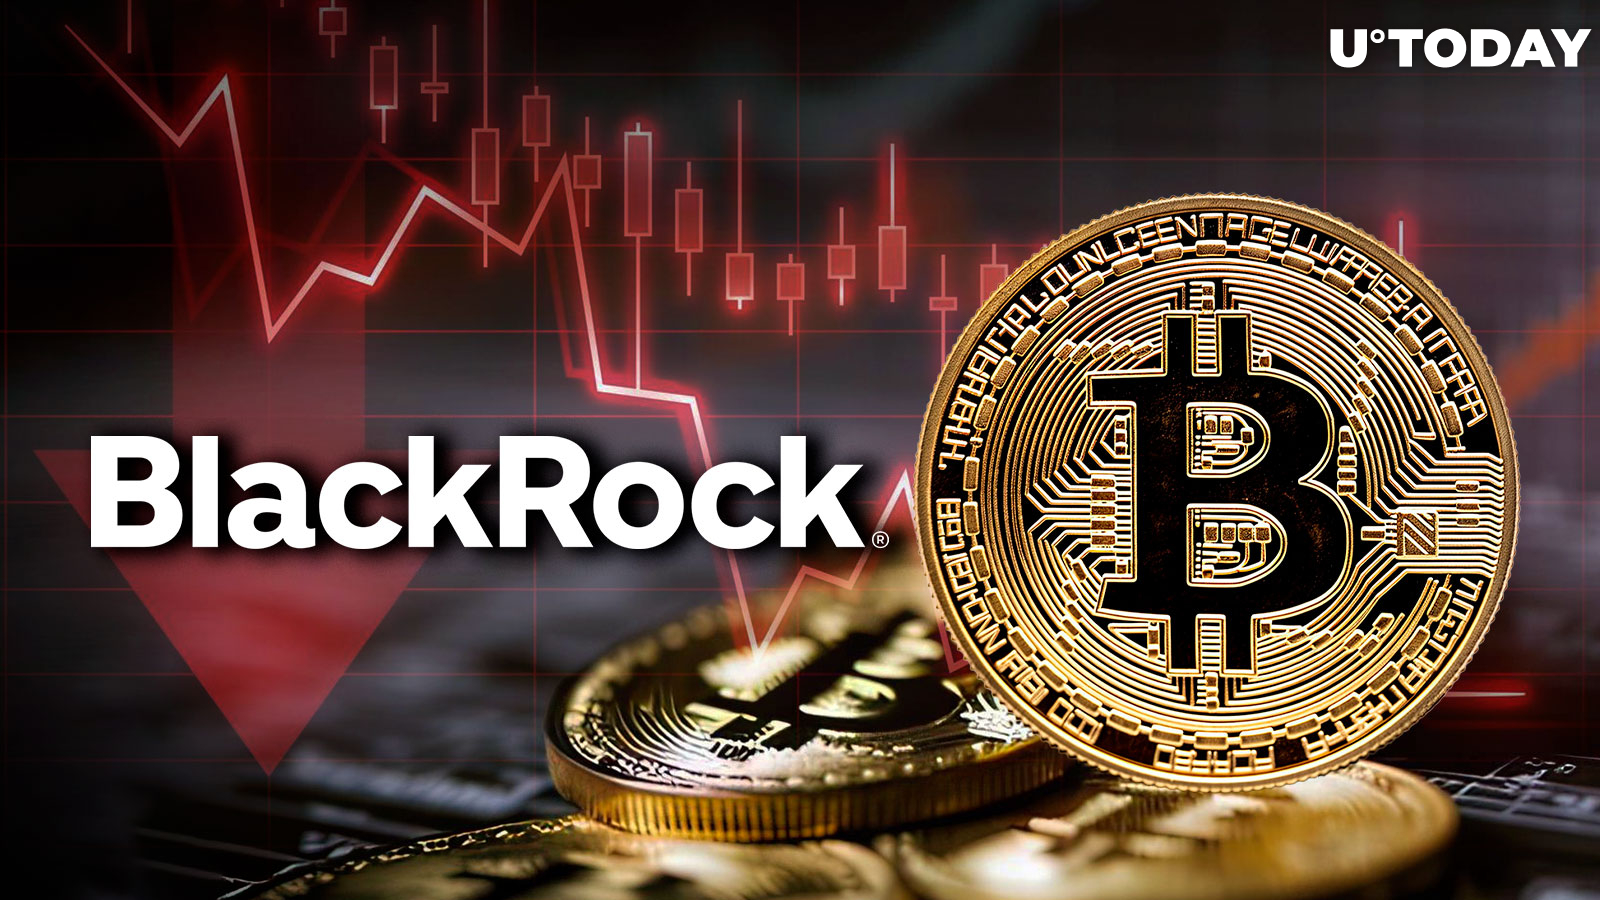 Bitcoin (BTC) Collapses 8% as BlackRock Denies ETF Approval Rumor